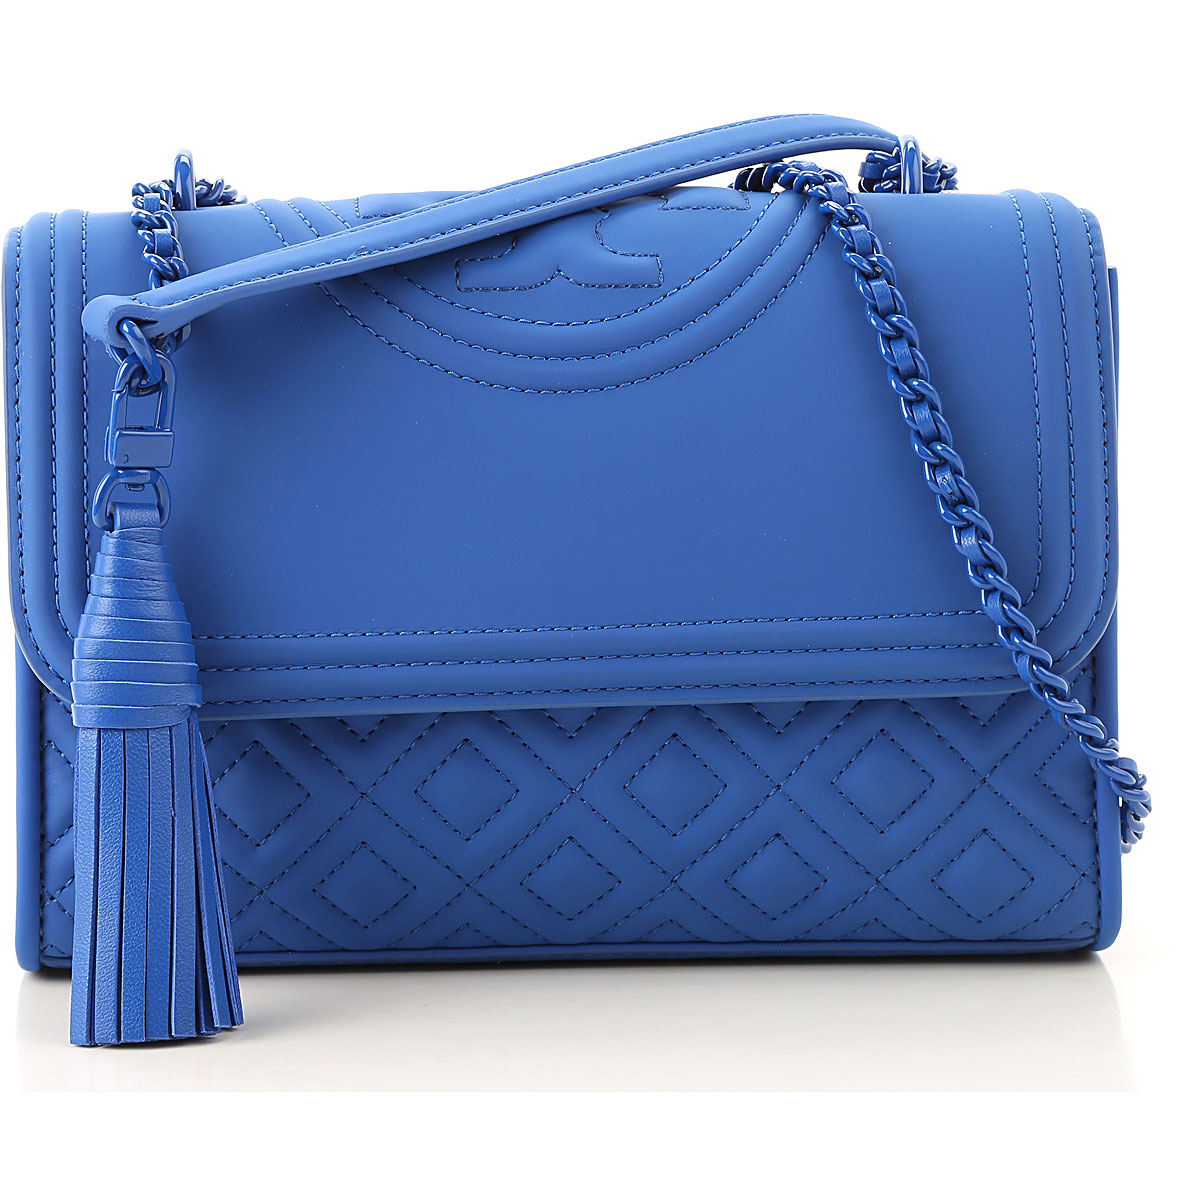 Handbags Tory Burch, Style code: 39927-454-